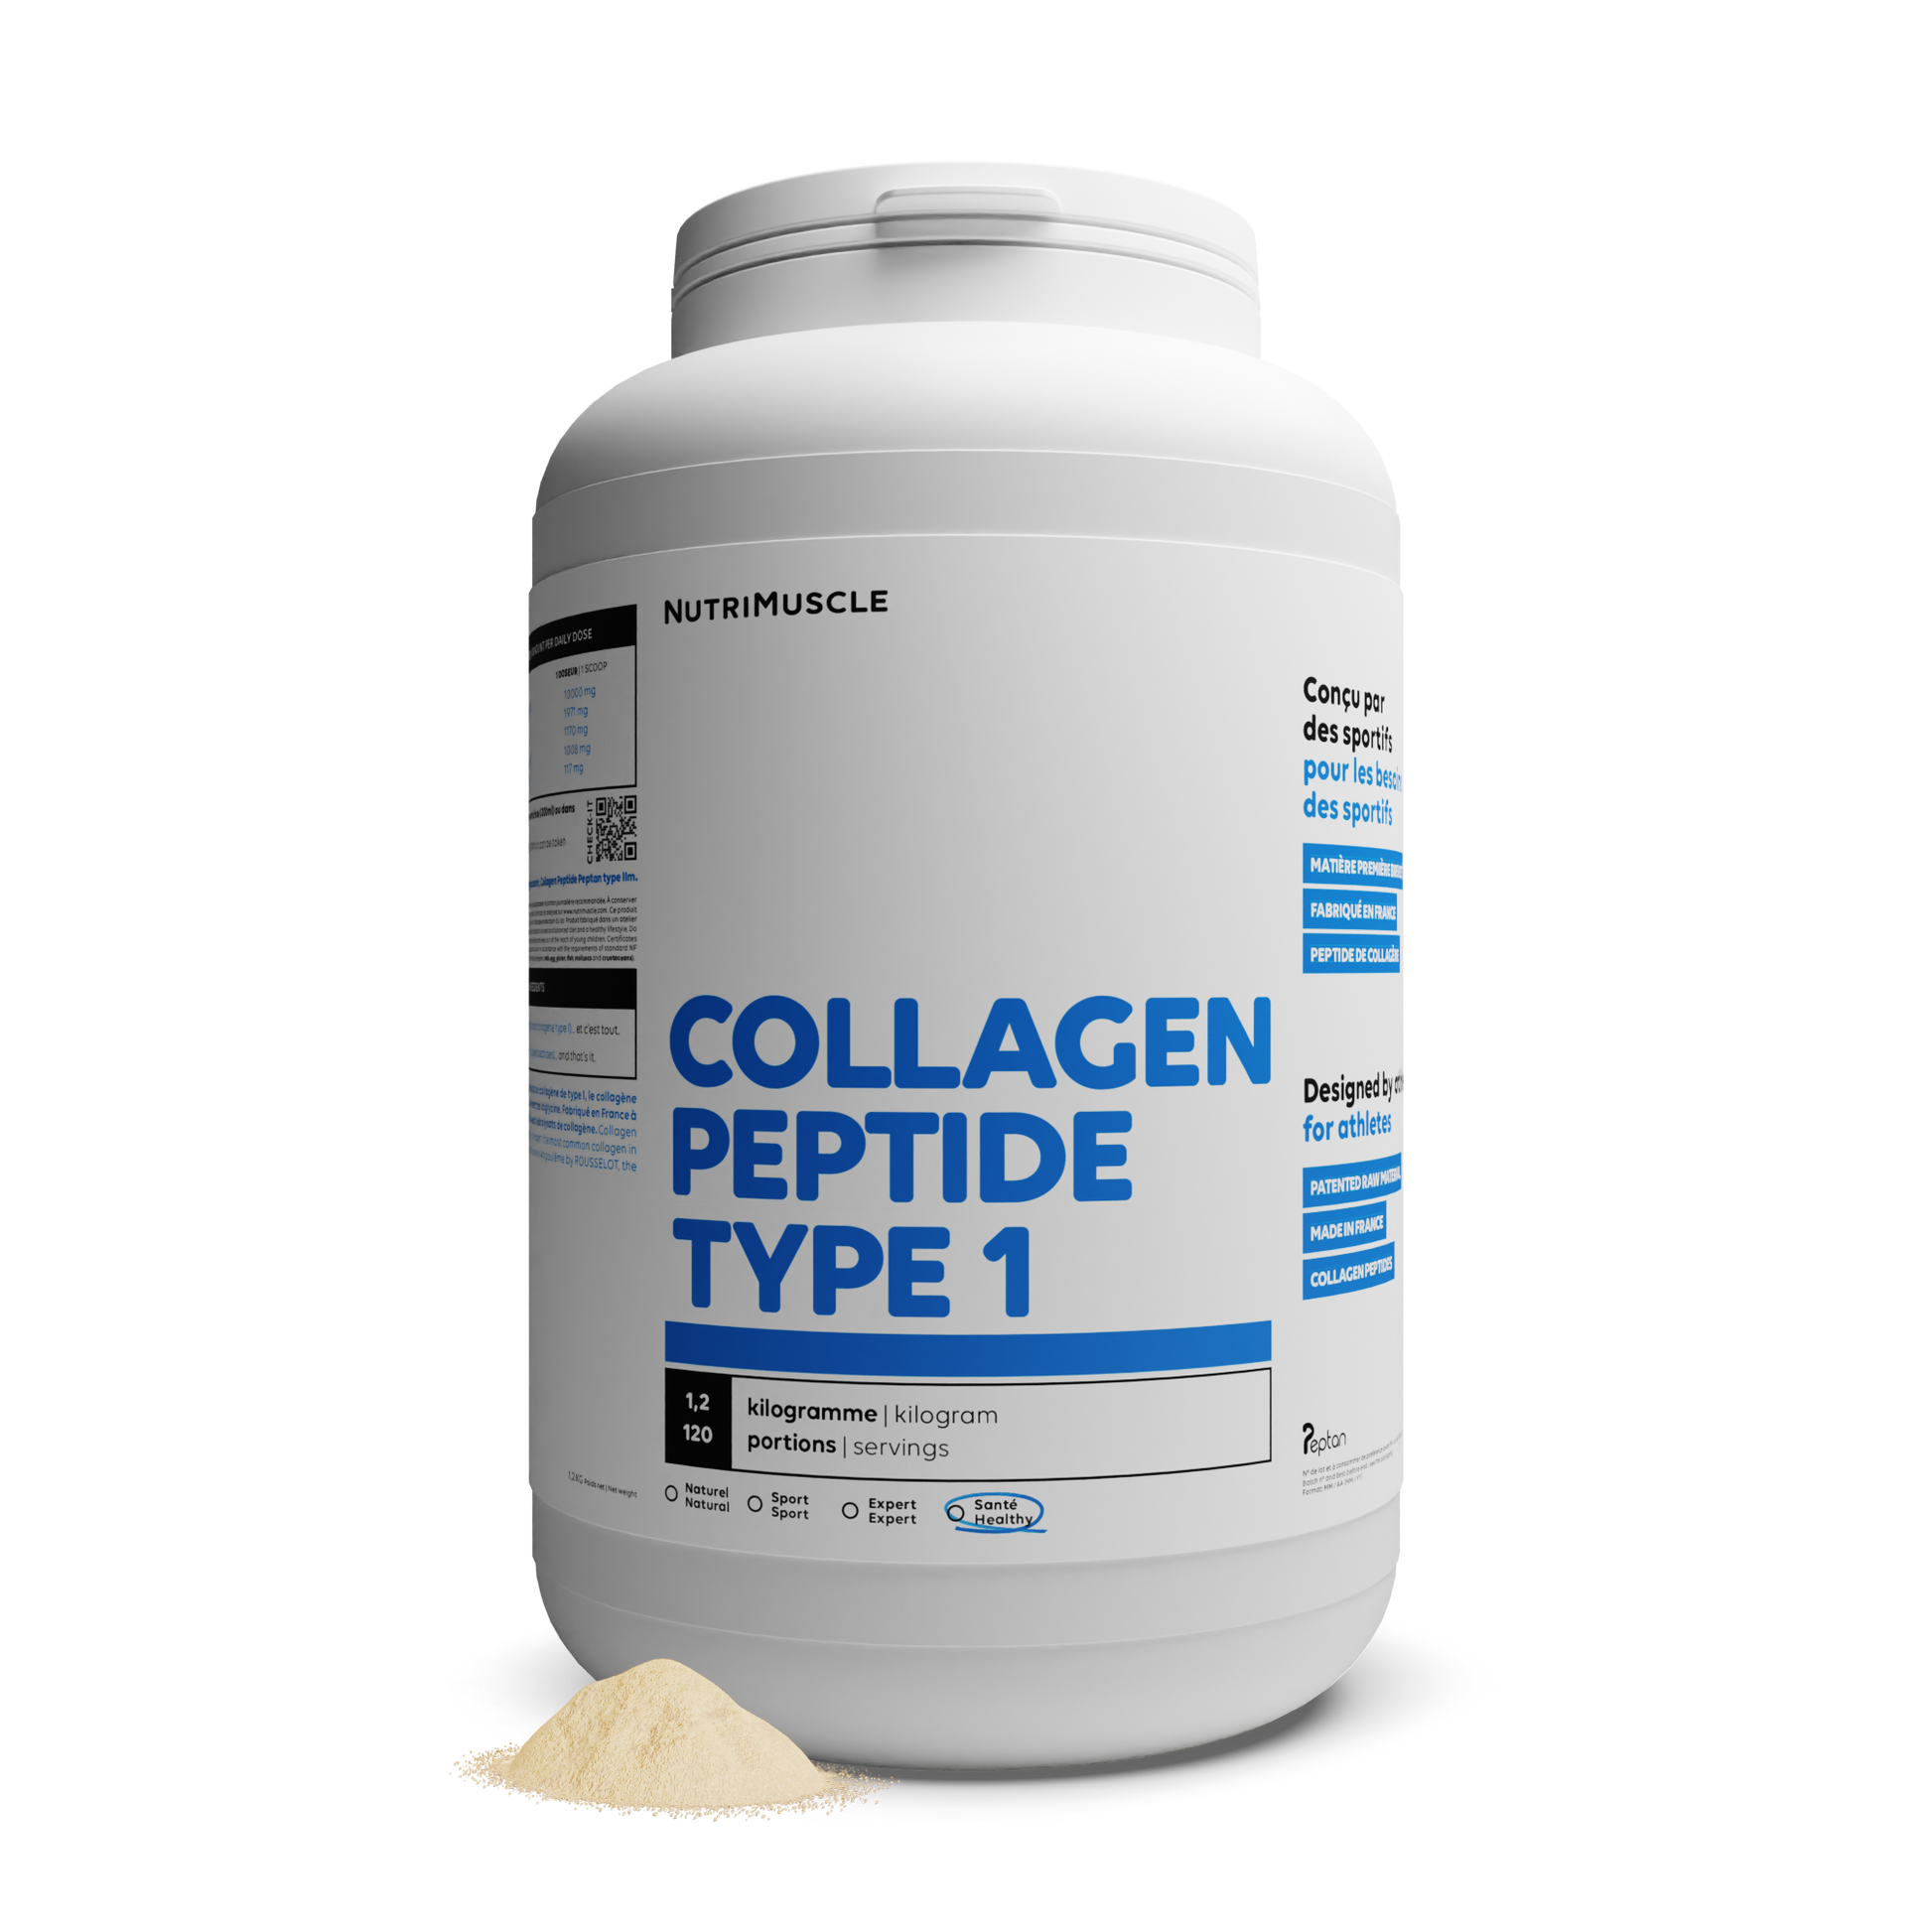 Collagene peptide peptan® 1 in polvere